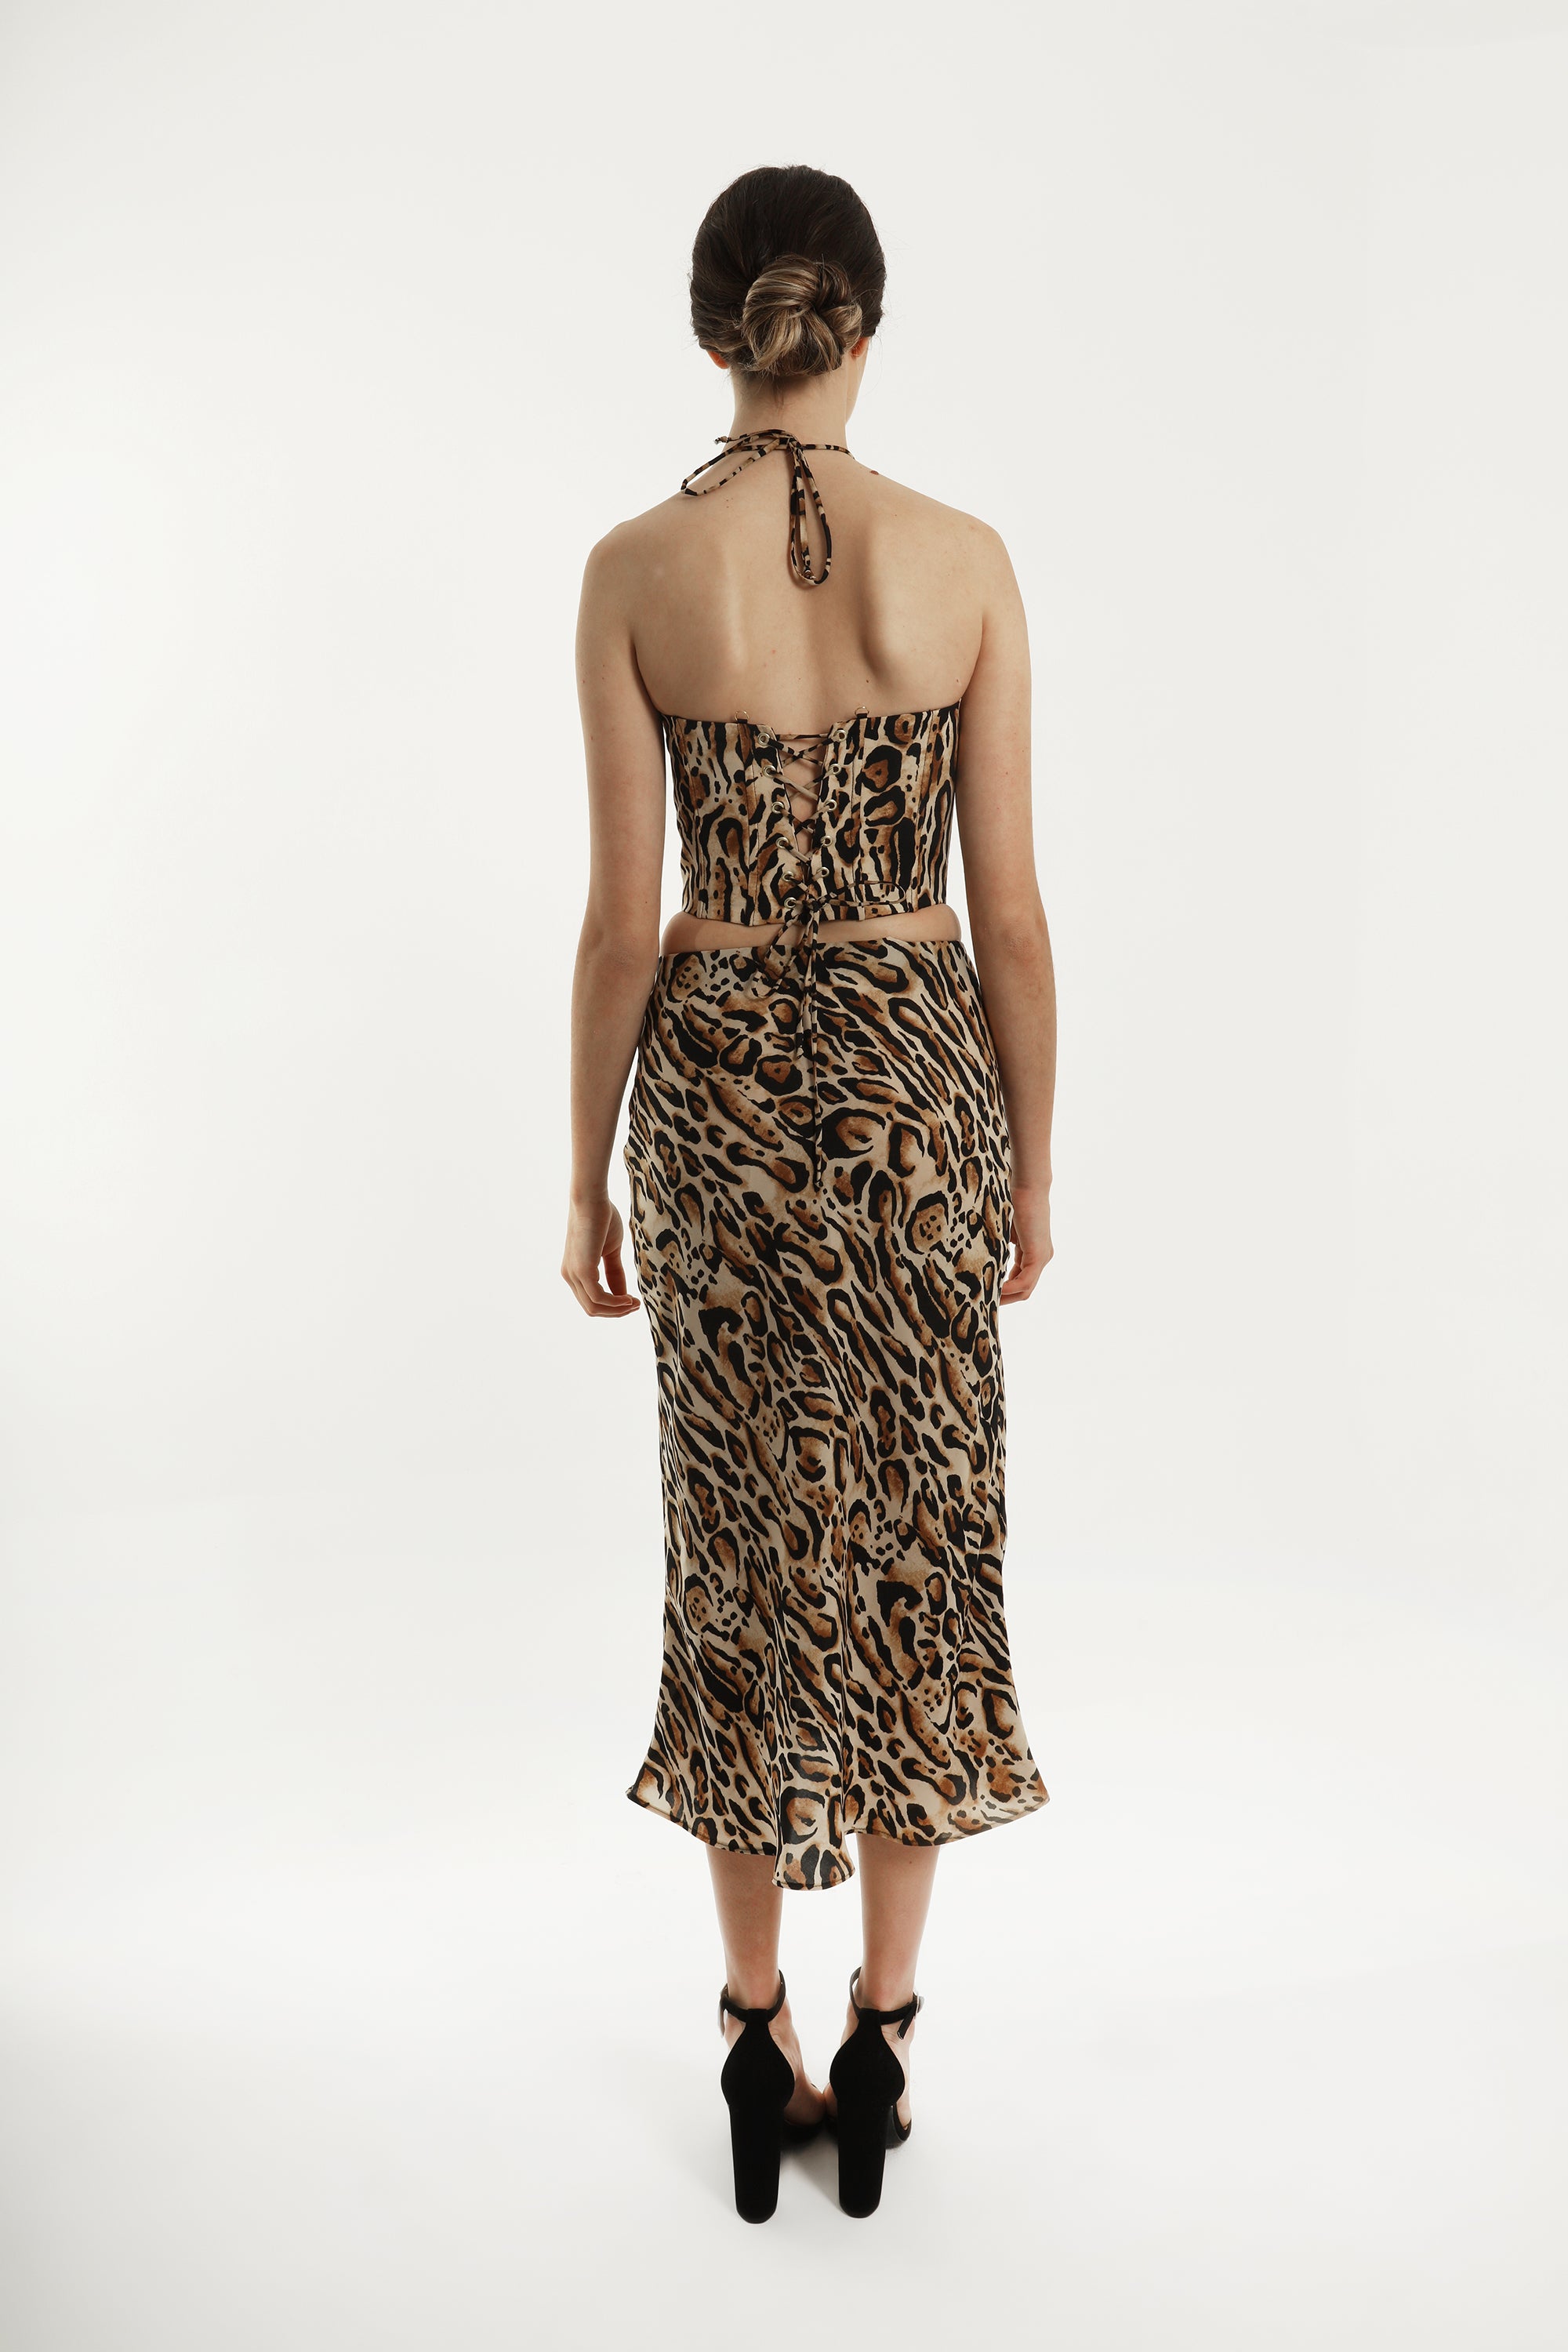 leopard print bustier top